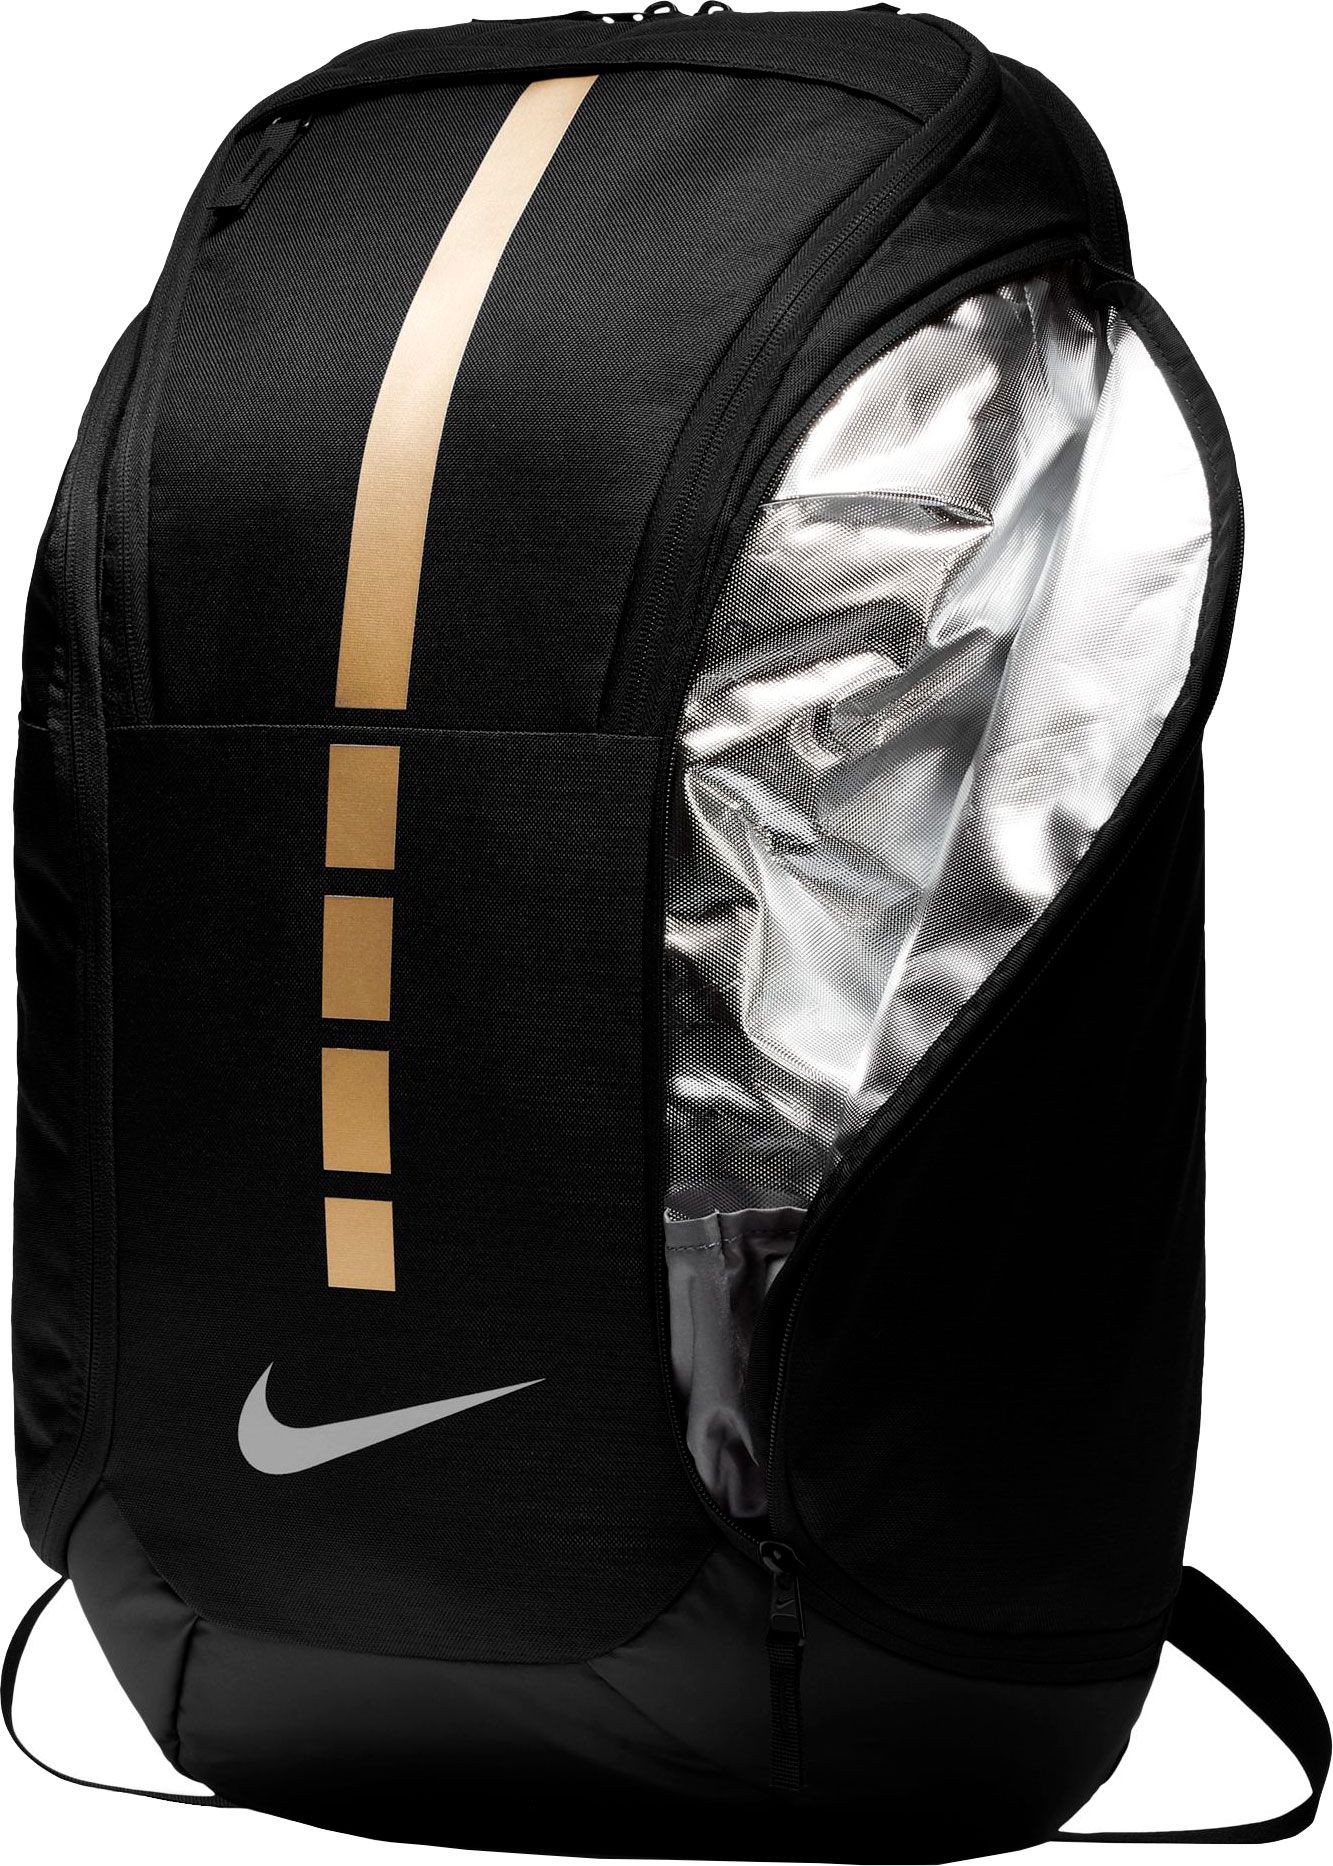 nike elite backpack colors